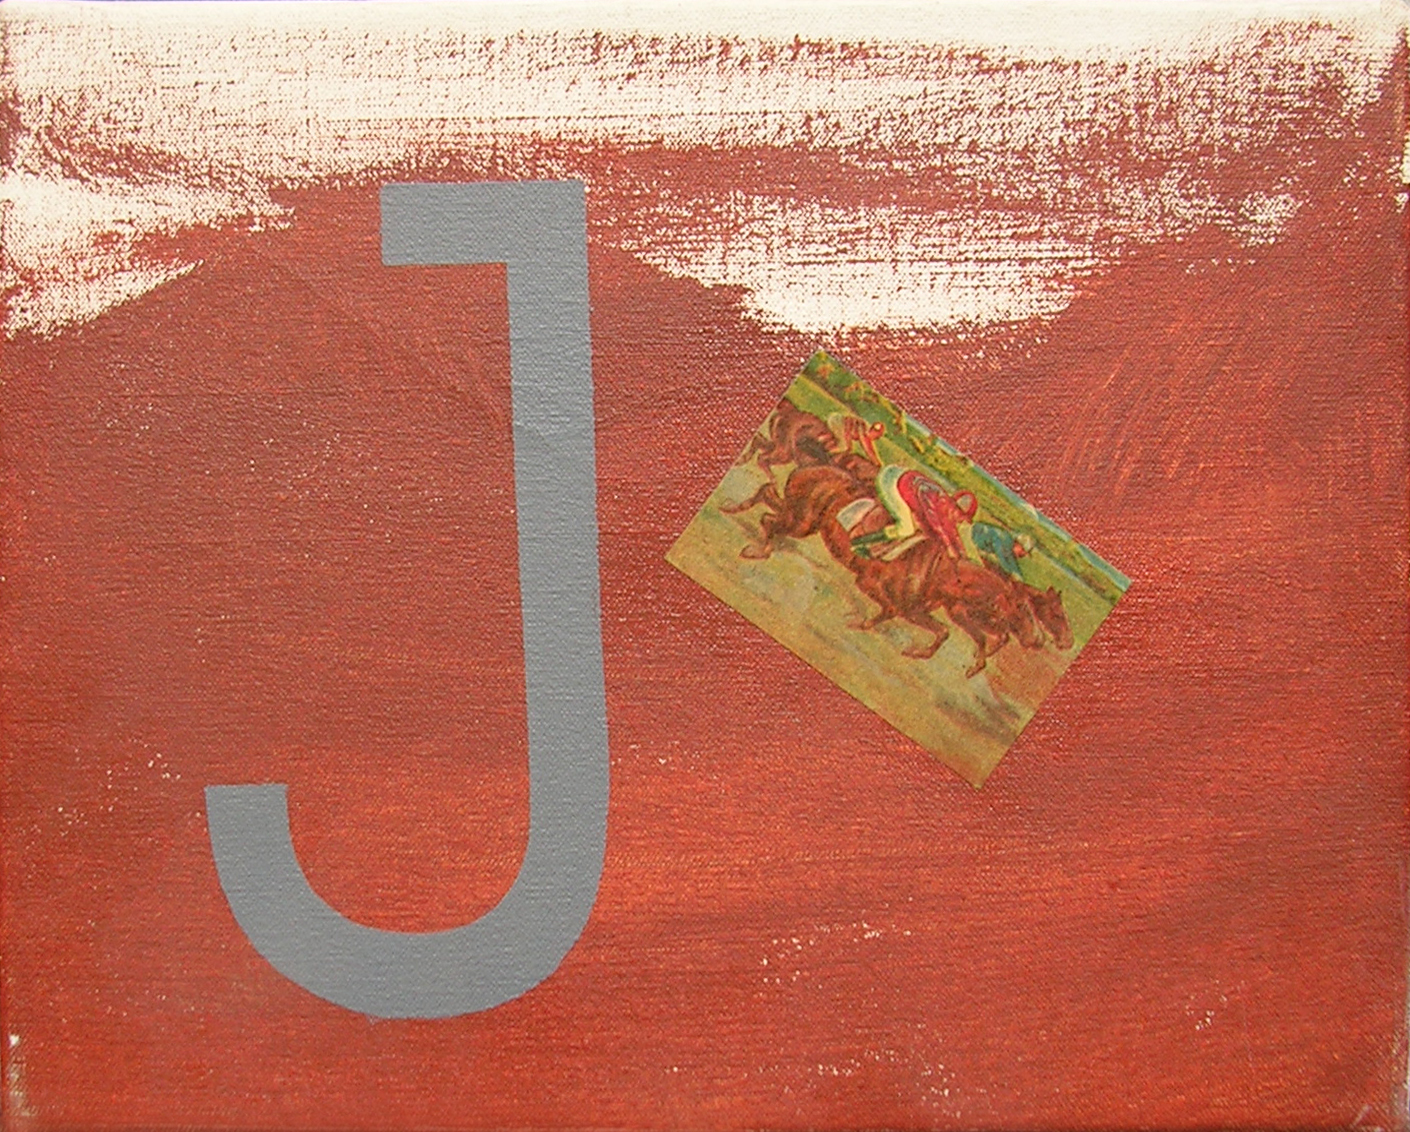 Abecedario J ; objetos ensamblados, tela, papel sobre bastidor, 30 cm x 40 cm, 2007